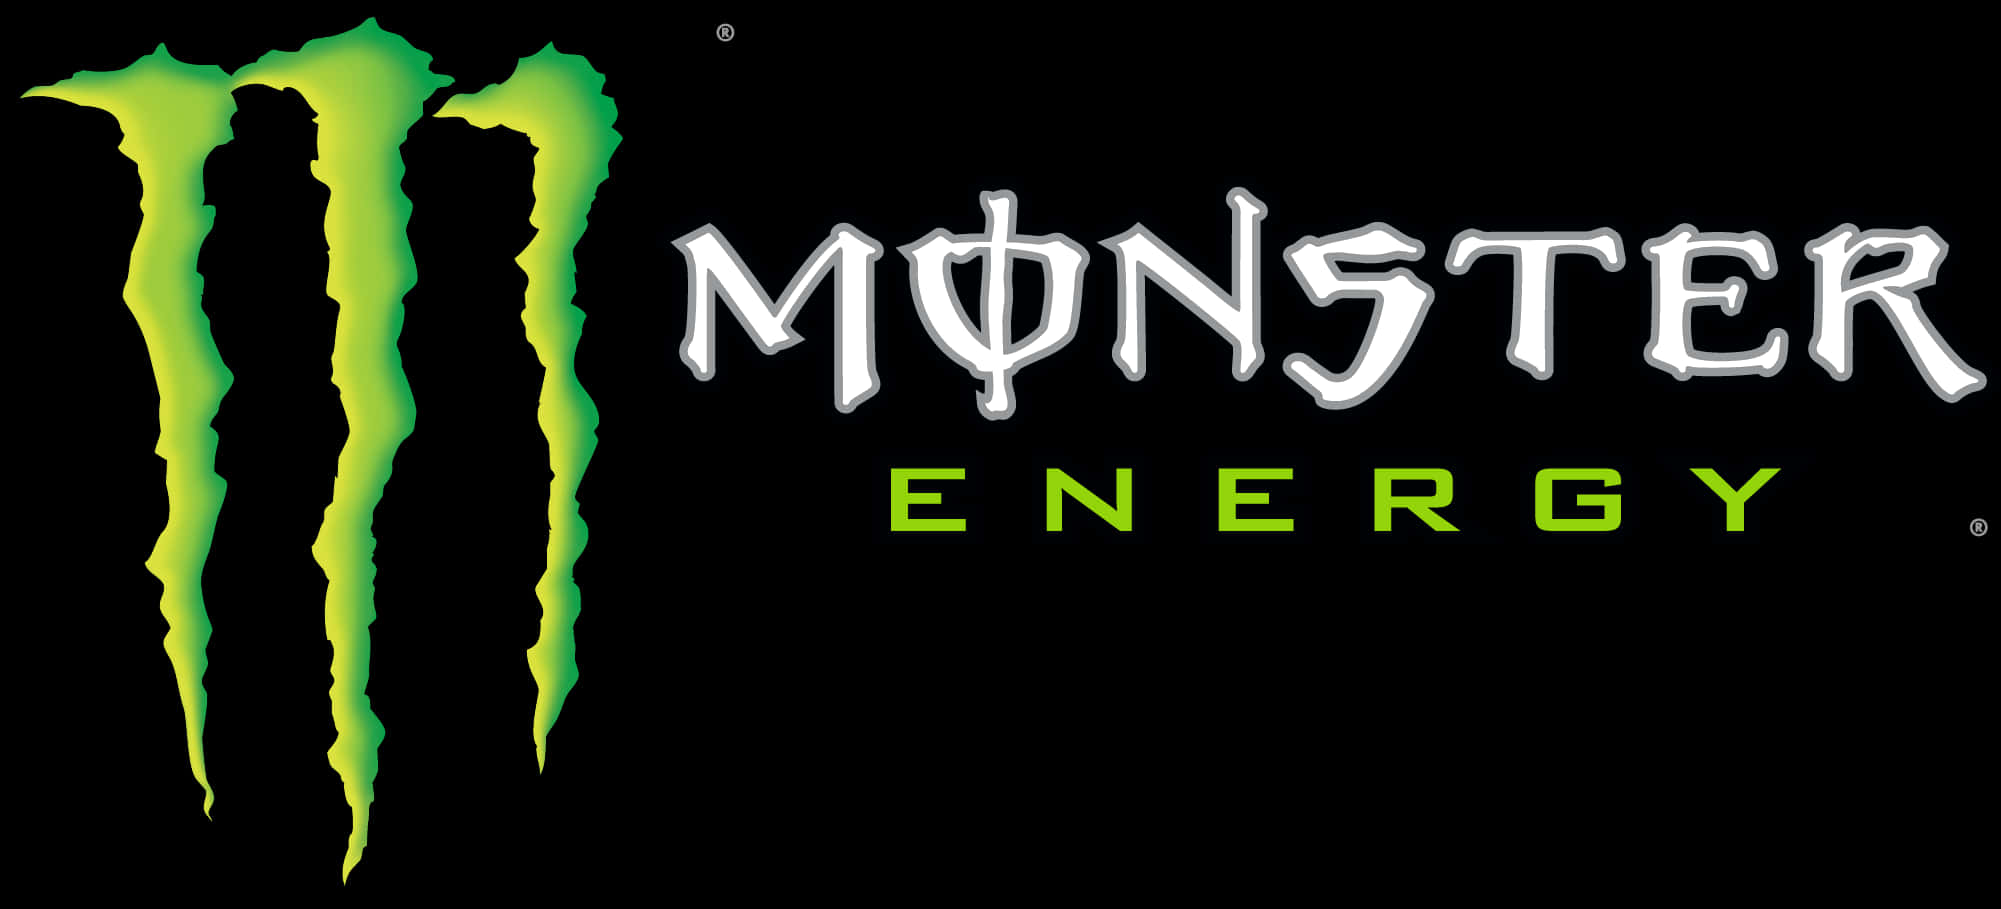 Green And White Monster Energy Drink Logo